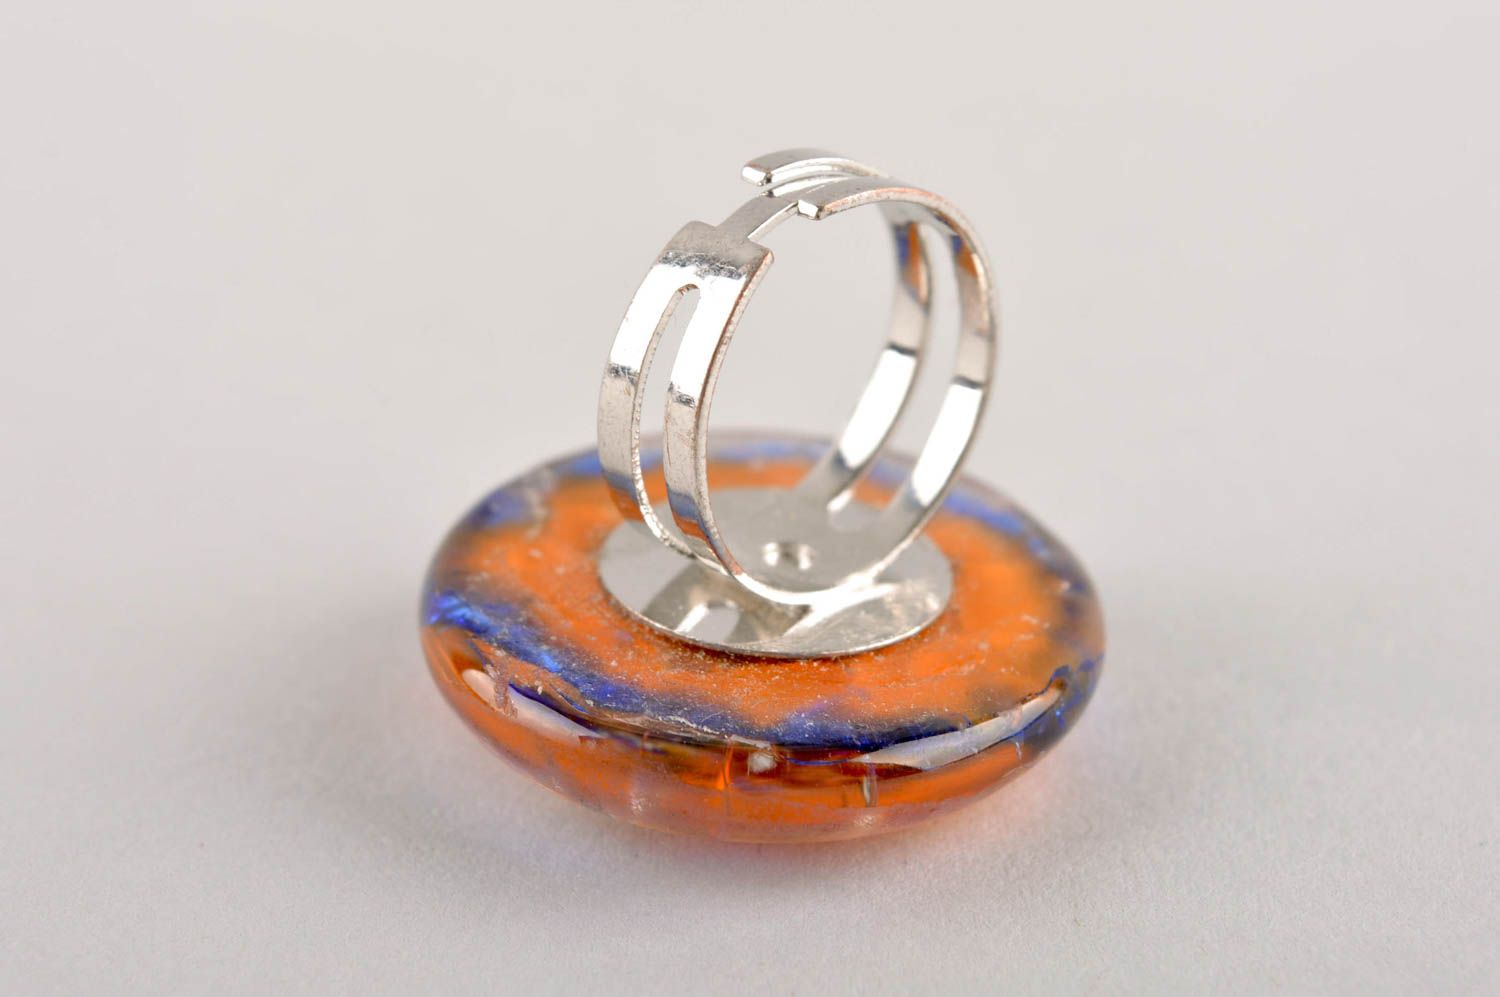 Handmade glass ring designer ring unusual jewelry glass accessory gift ideas photo 5